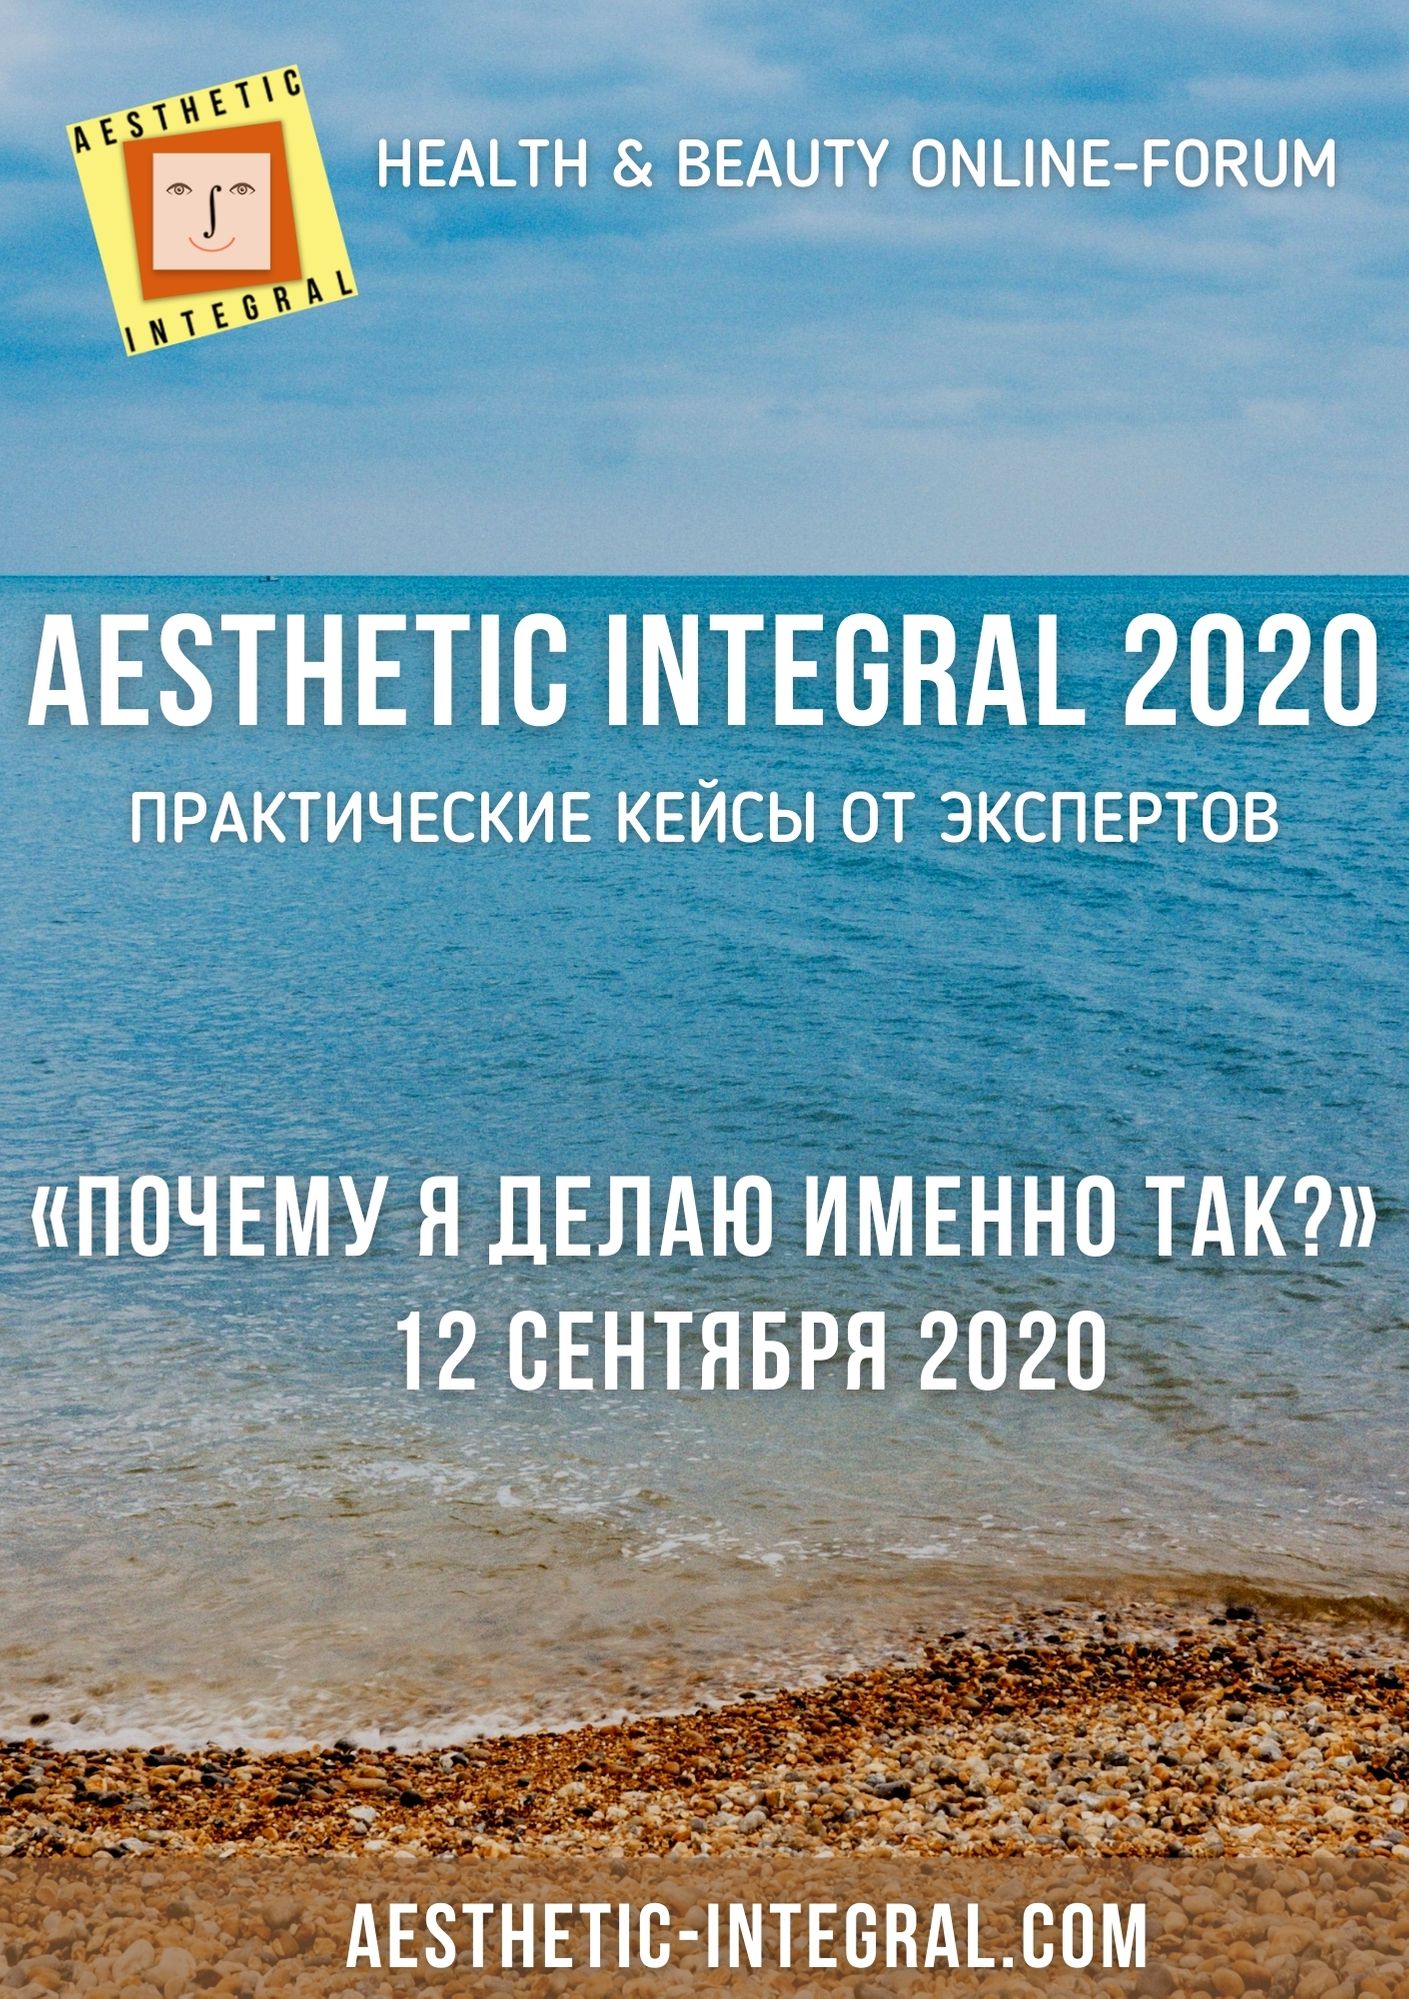 HEALTH & BEAUTY ONLINE-FORUM «AESTHETIC INTEGRAL 2020»